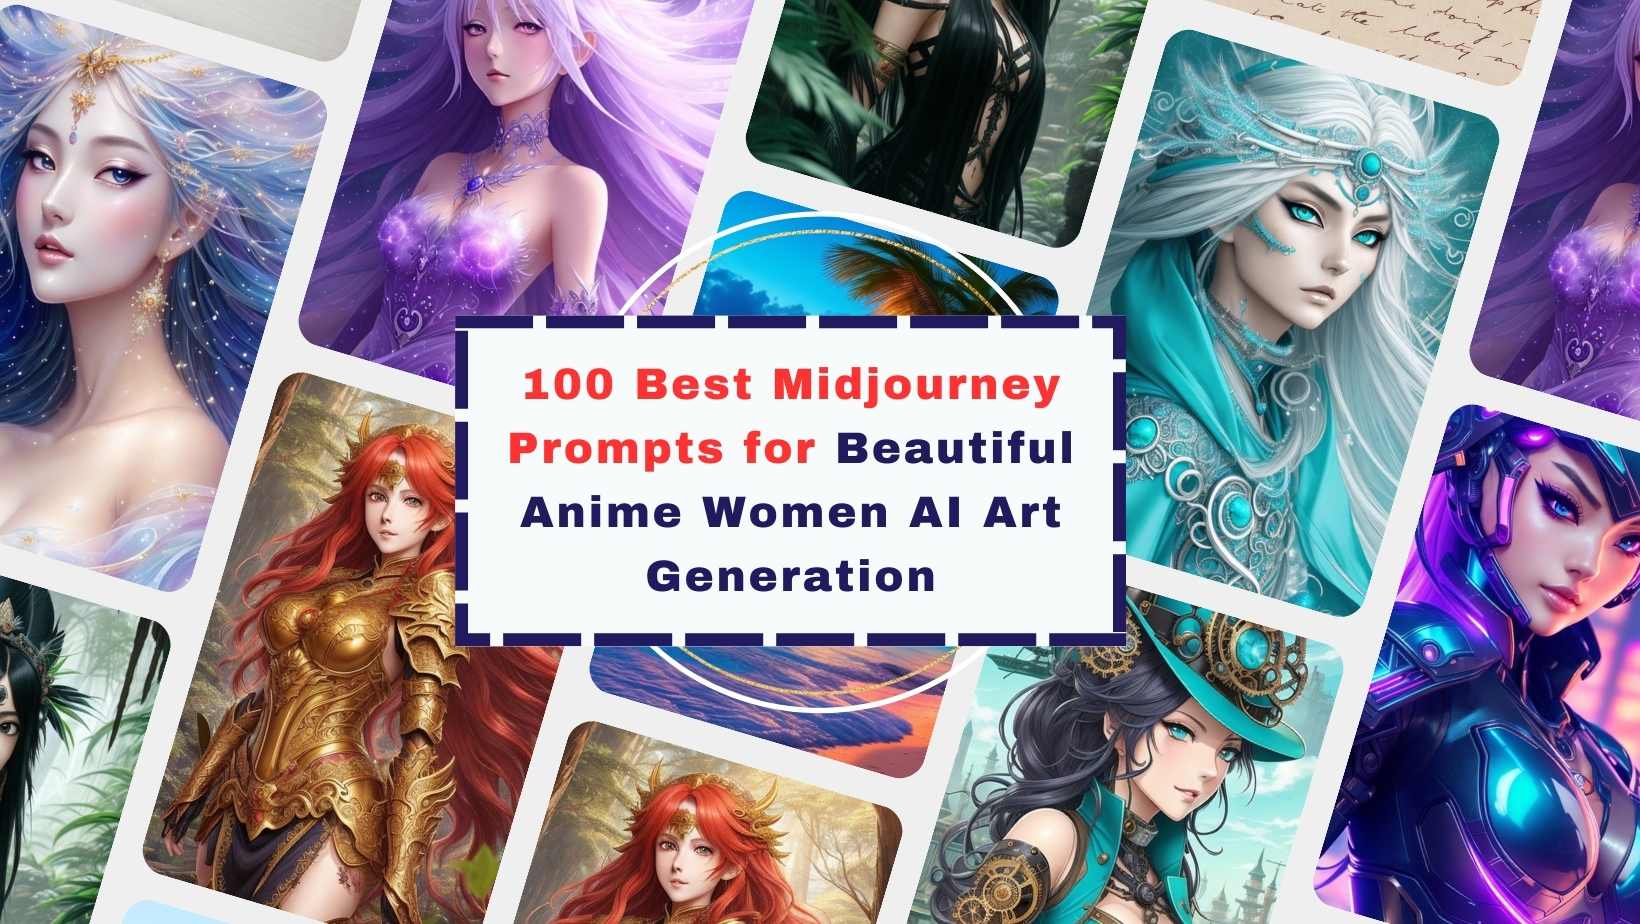 100 Best Midjourney Prompts for Beautiful Anime Women AI Art Generation